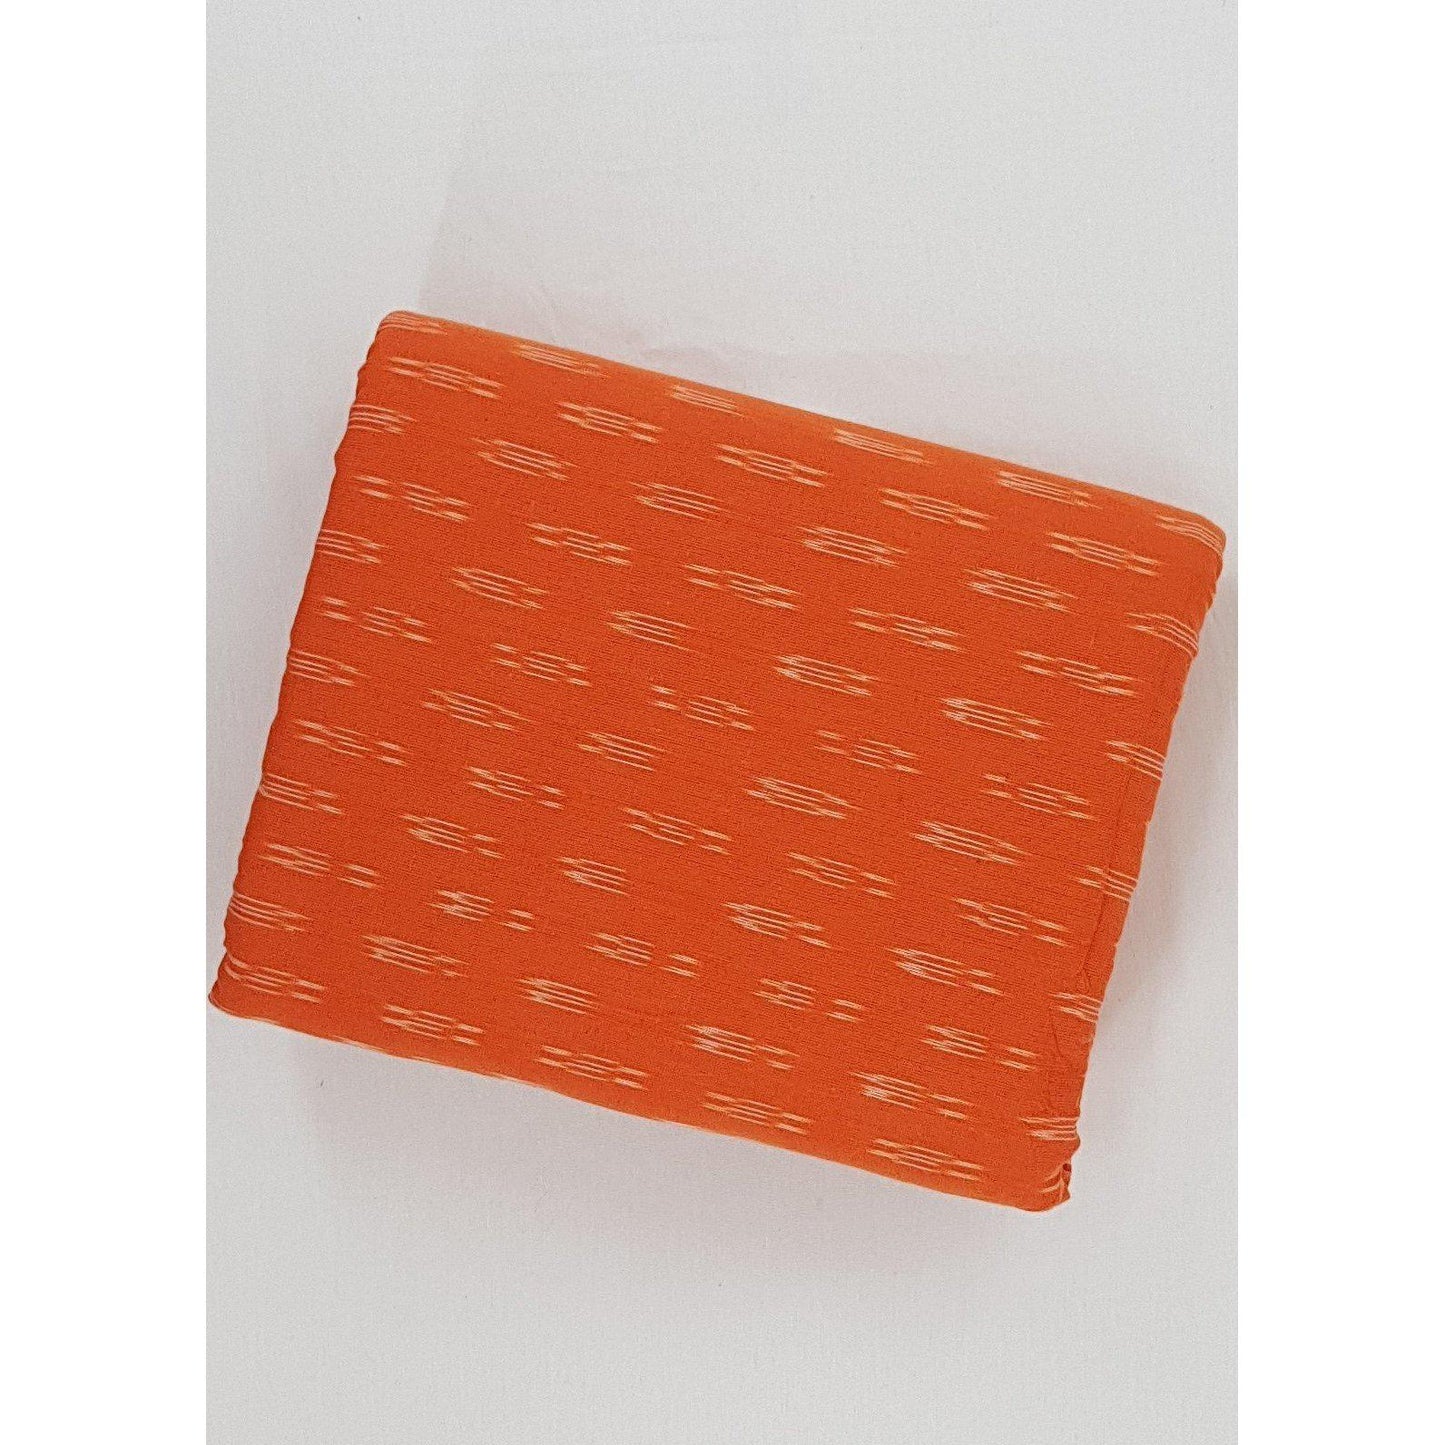 Alphonso Orange color ikat handwoven cotton fabric - Vinshika